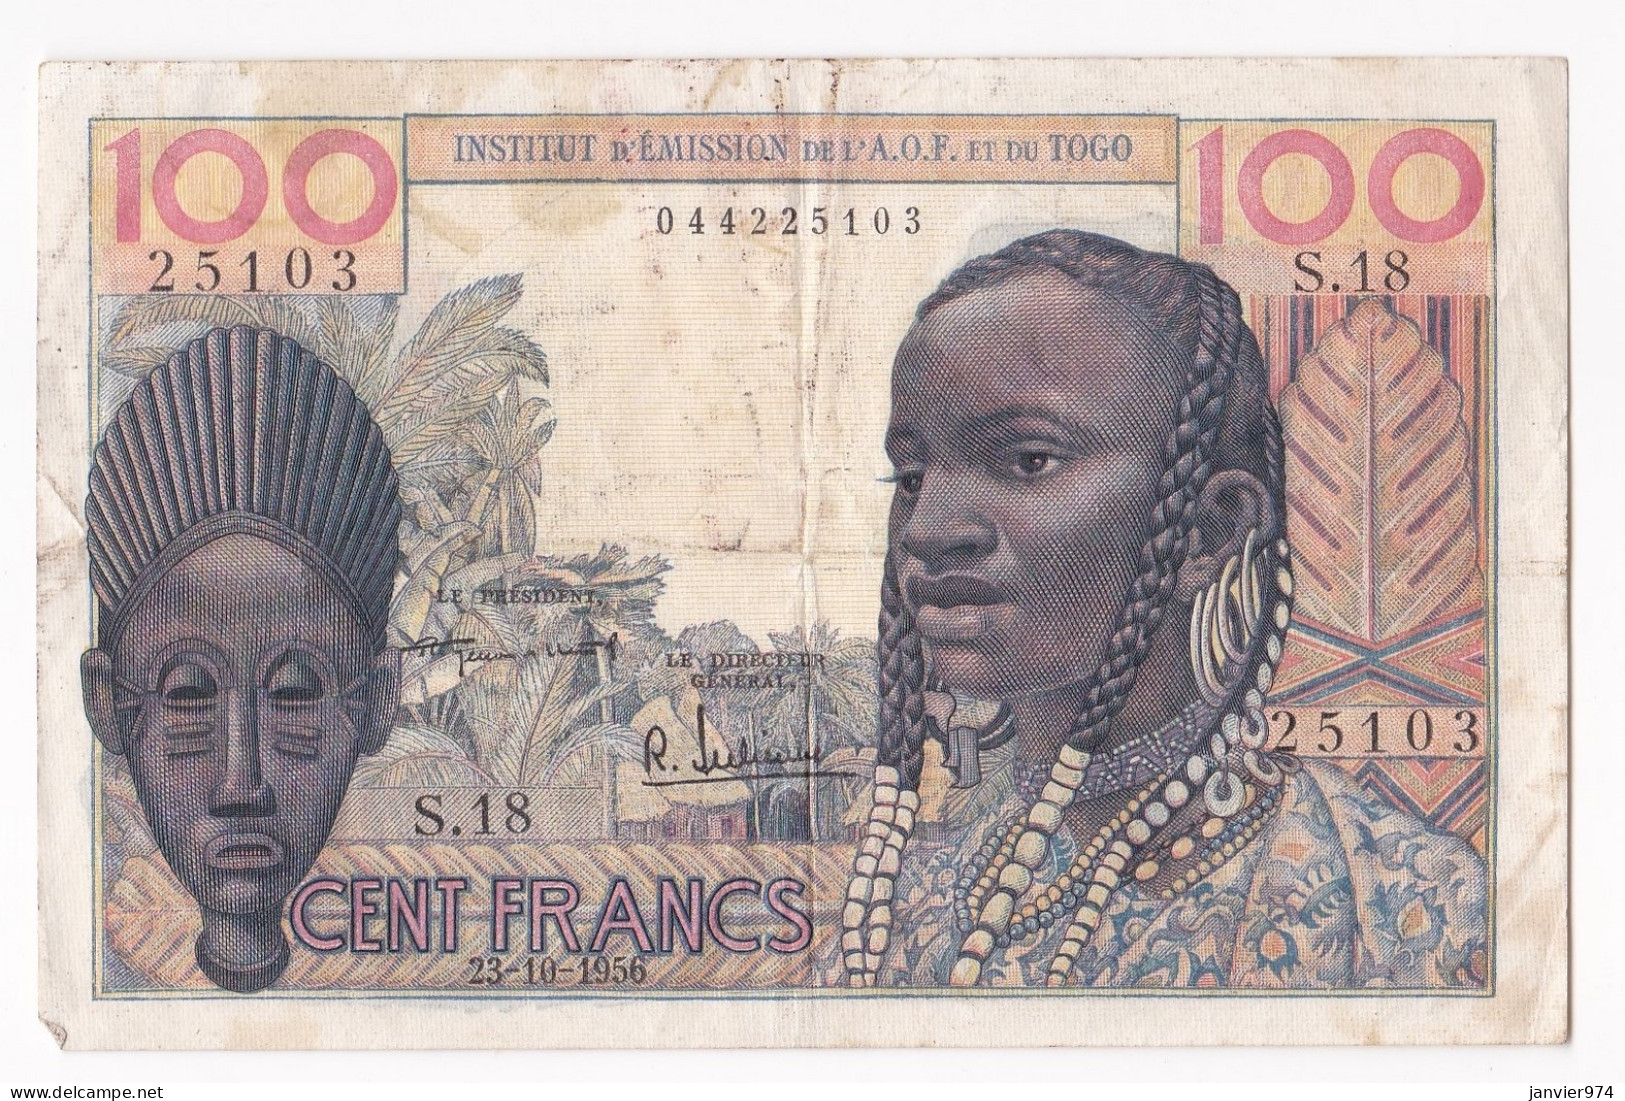 Institut D'émission De L'A.O.F Et Du TOGO . 100 Francs 23 – 10 – 1956, Alphabet S.18 ,n° 25103 - Togo